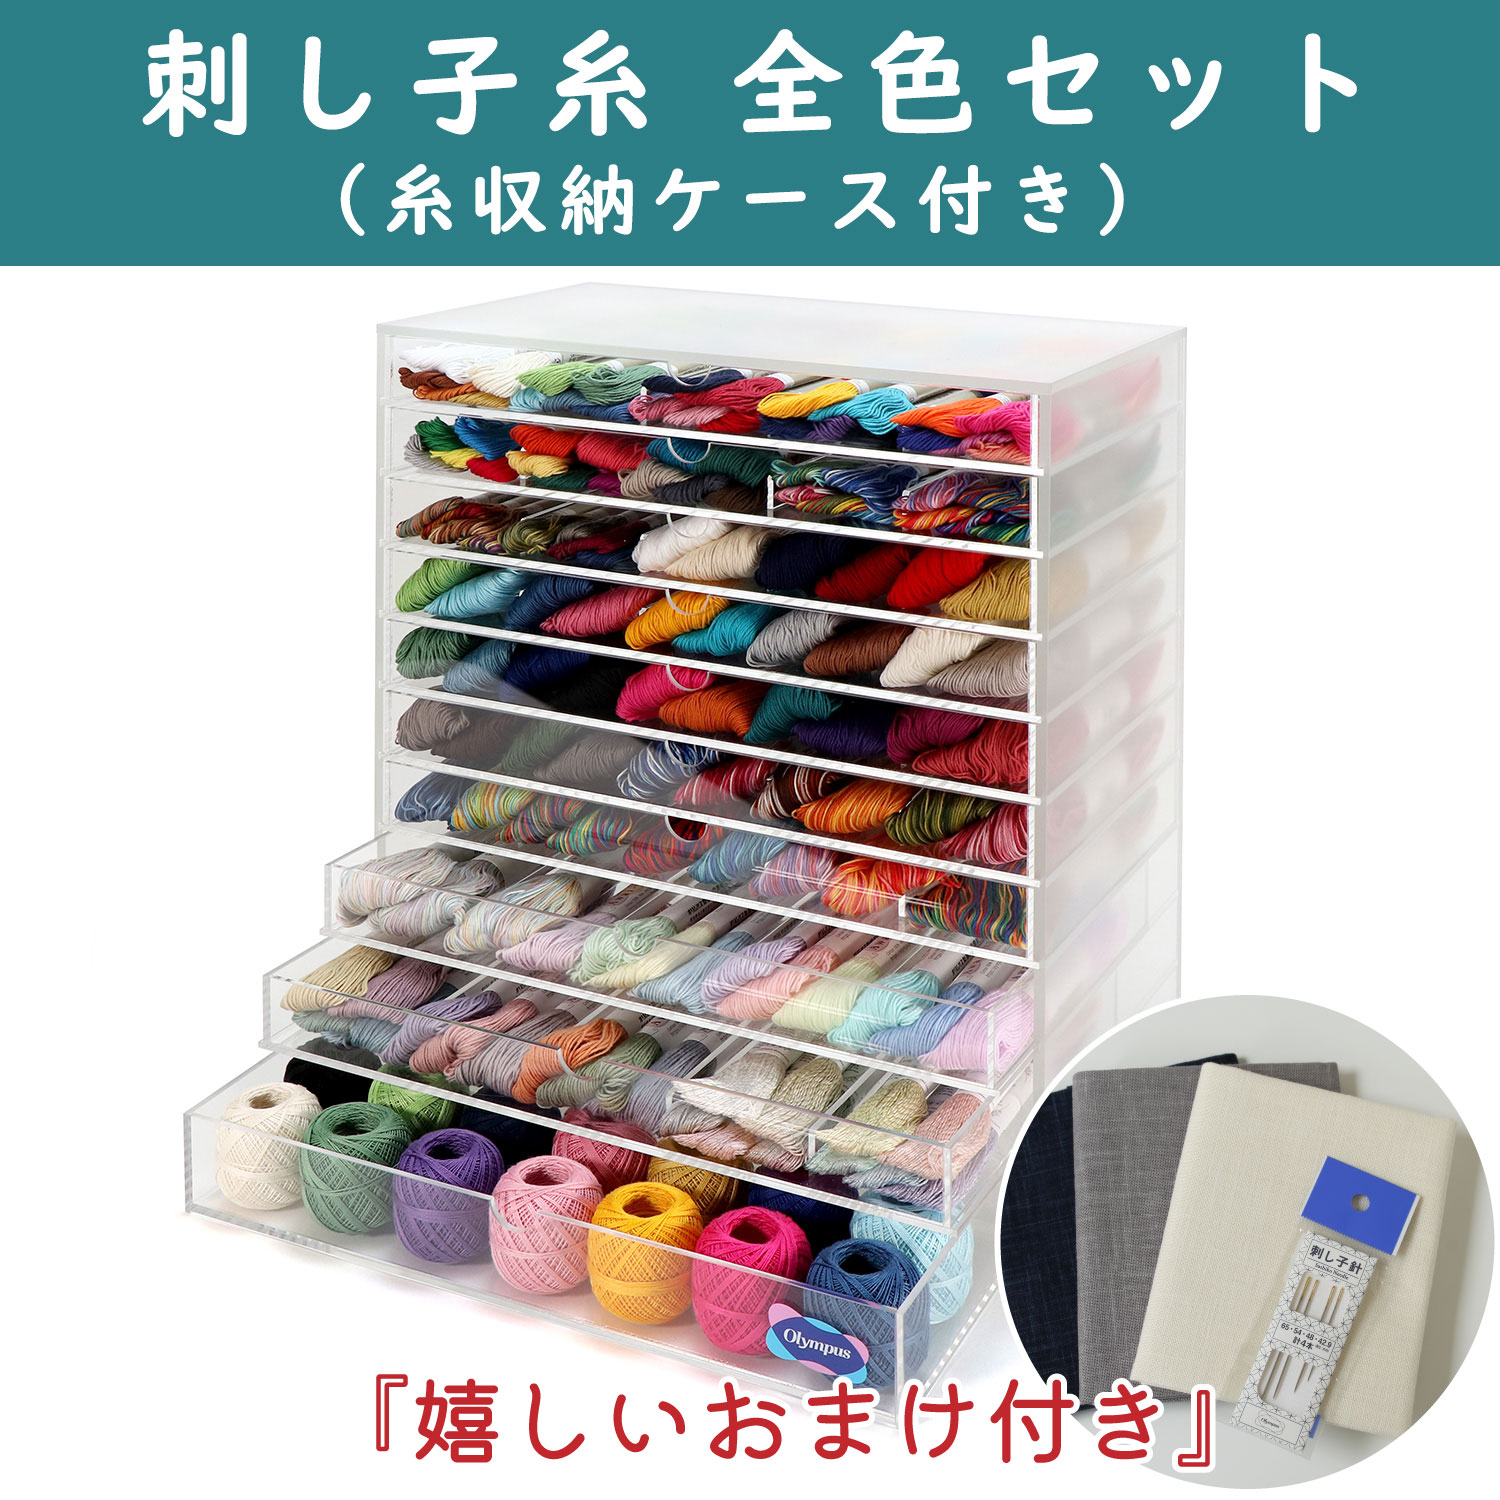 [Shipping starts from 5/29]OS-CASESET Olimpas Sashiko thread all colors set - with thread storage case (set)